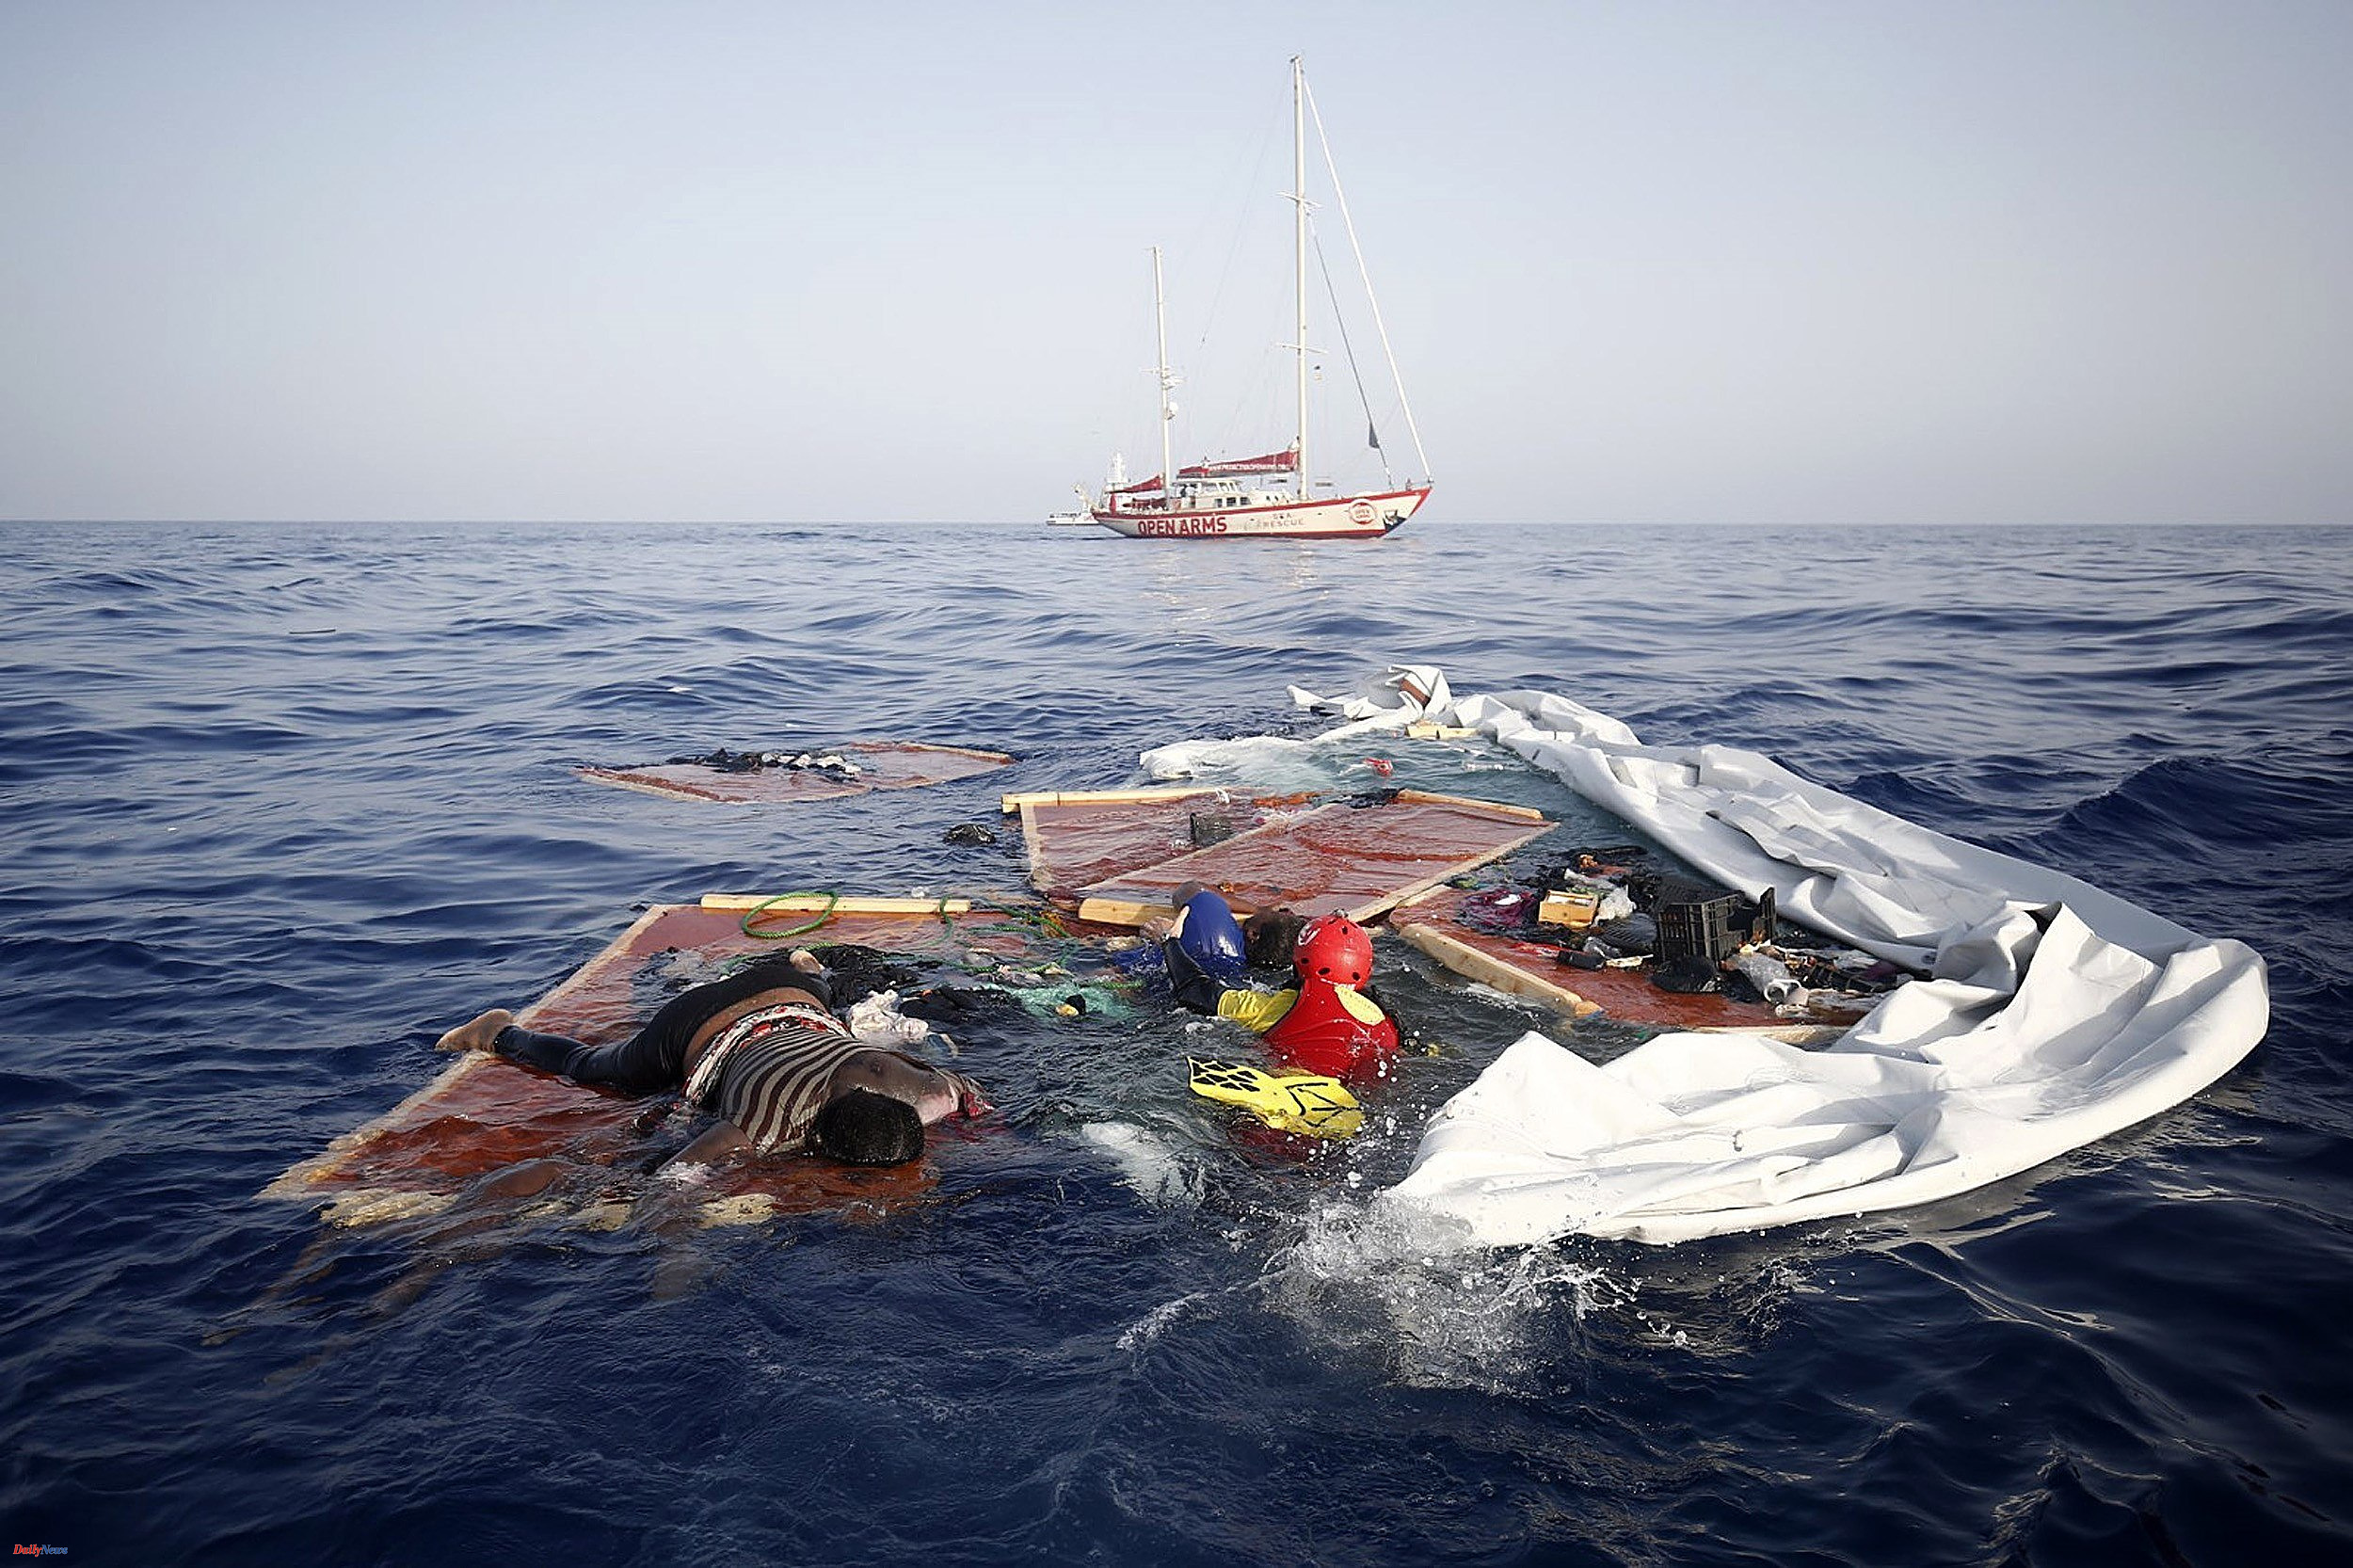 Africa 61 migrants die in shipwreck off Libyan coast